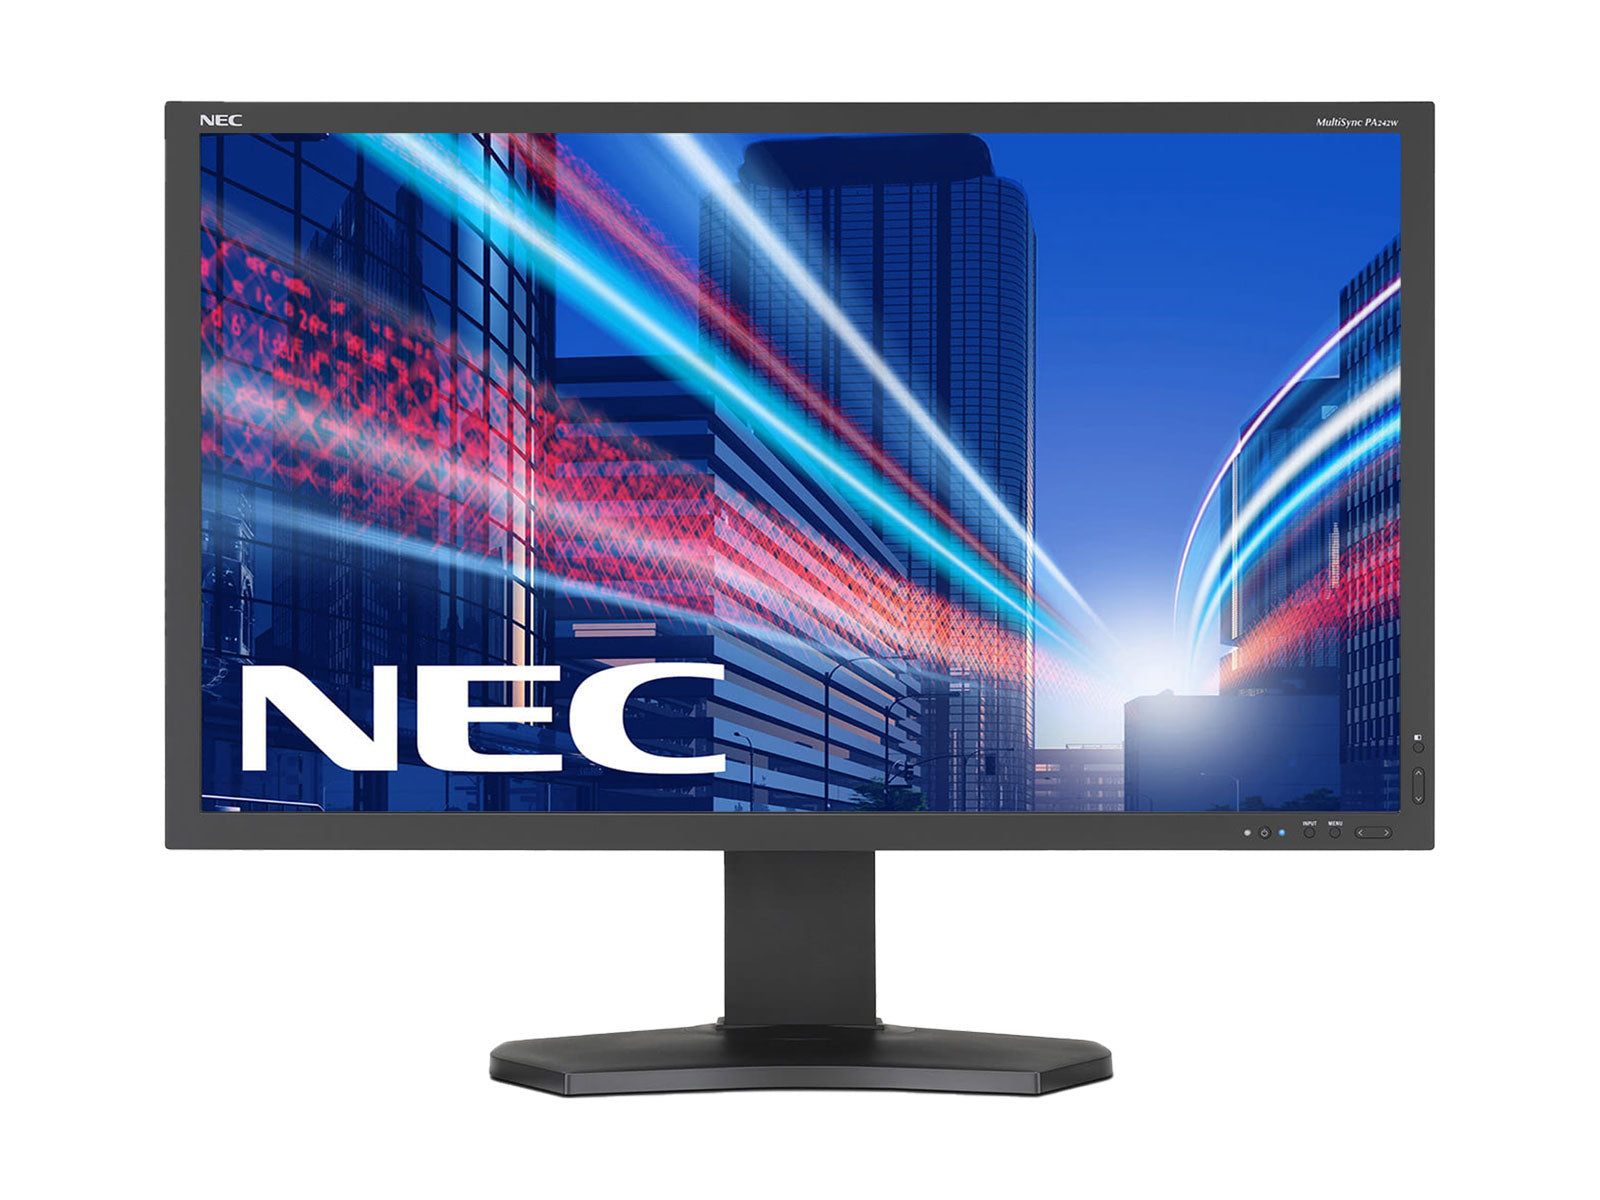 NEC MultiSync PA242W 24" WUXGA 1920 x 1200 Professional Wide Gamut Graphics Display Monitor (PA242W) Monitors.com 